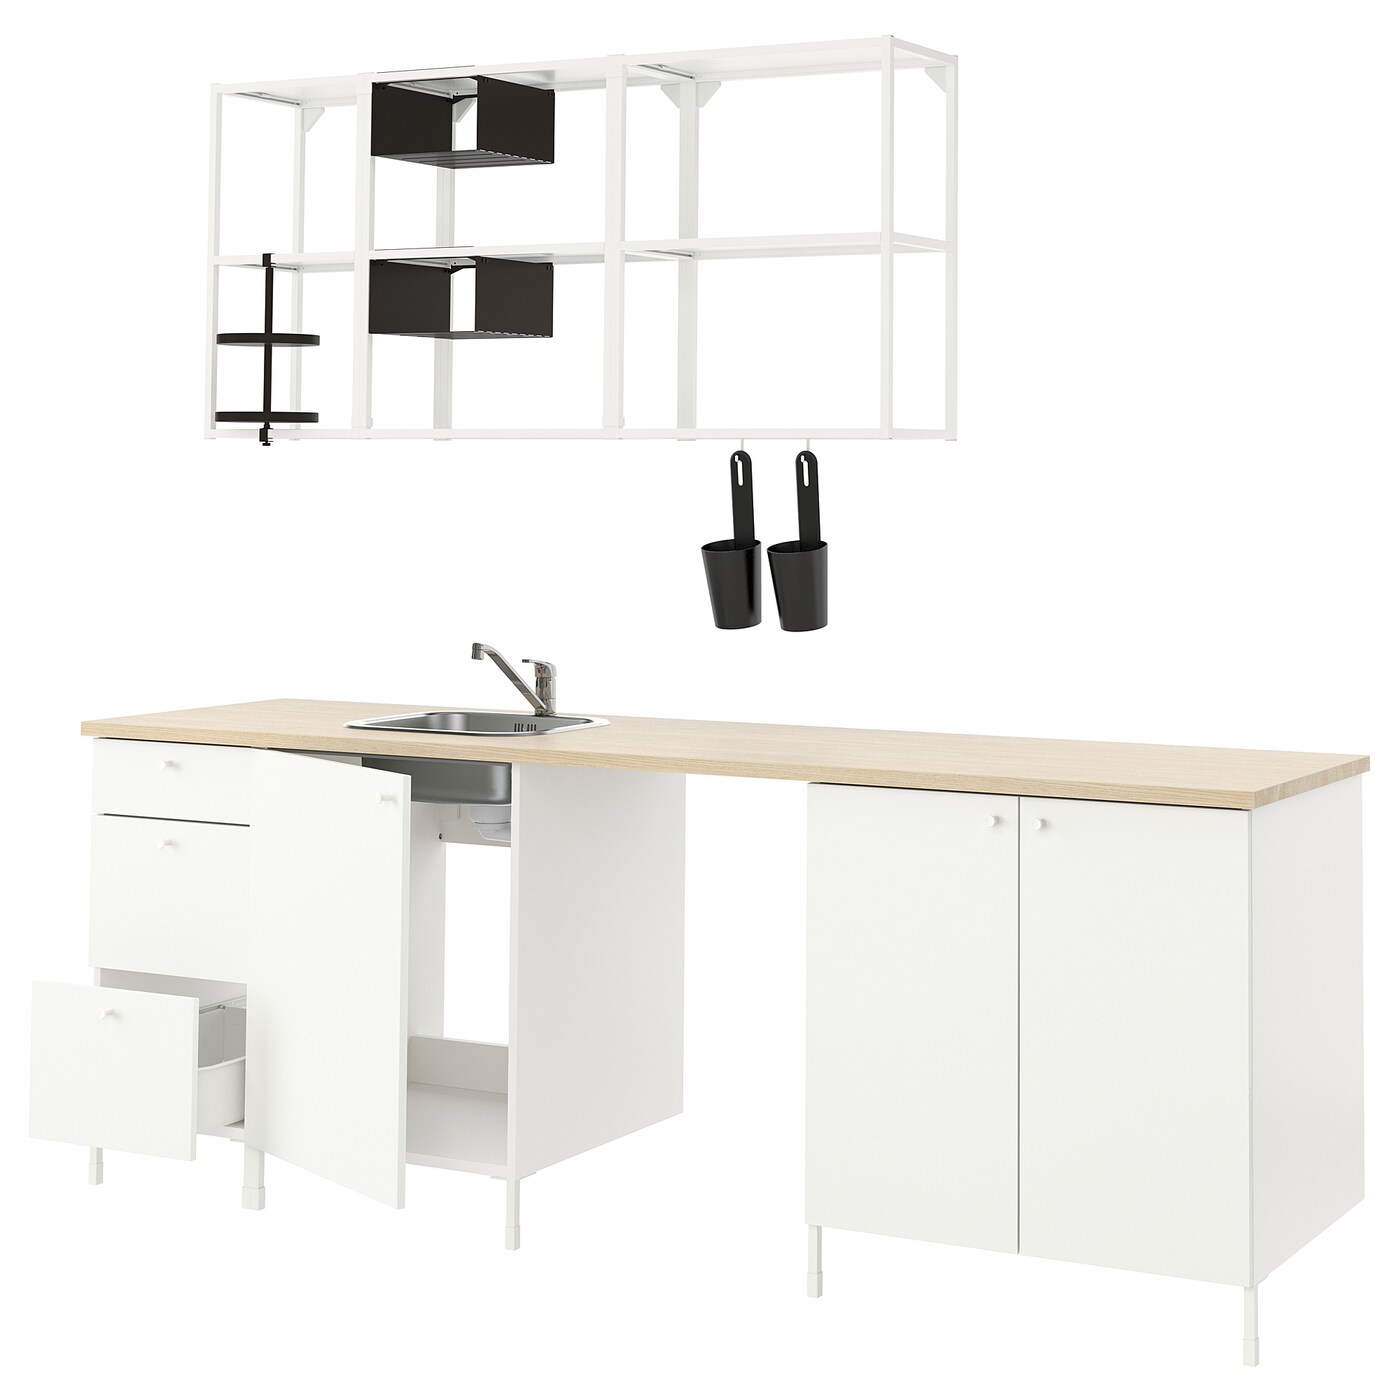 Кухонная комбинация для хранения - ENHET  IKEA/ ЭНХЕТ ИКЕА, 243х63,5х222 см, белый/бежевый